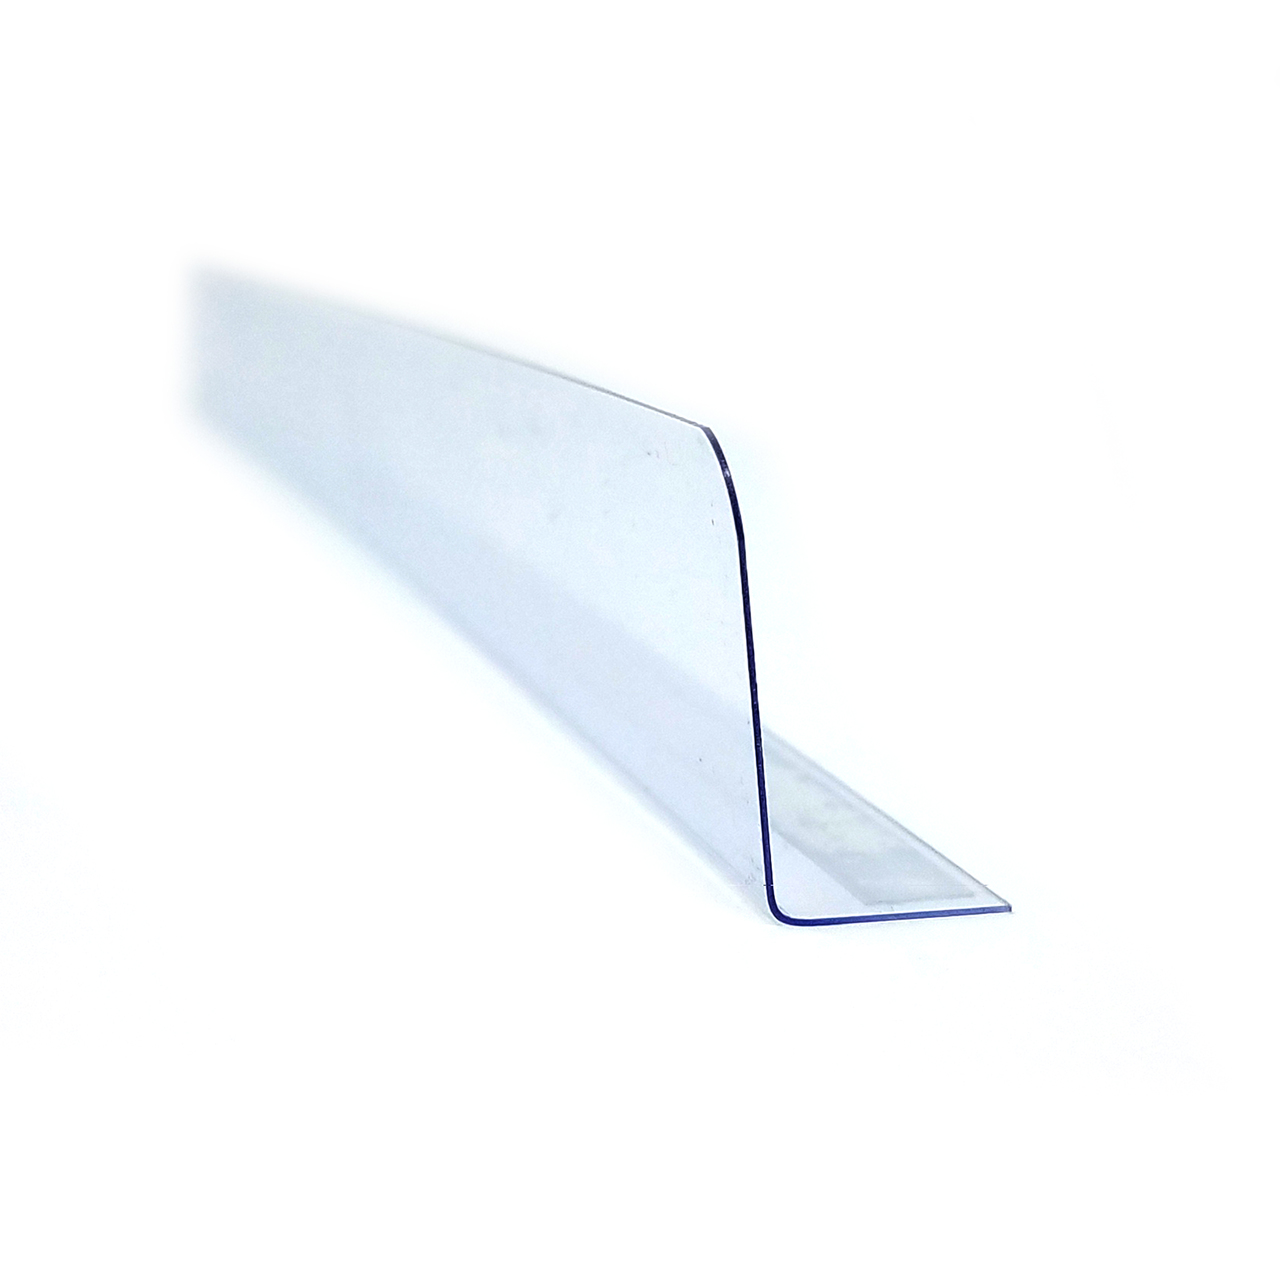 12 L Clear Self Adhesive Plastic Shelf Divider - Store Fixtures